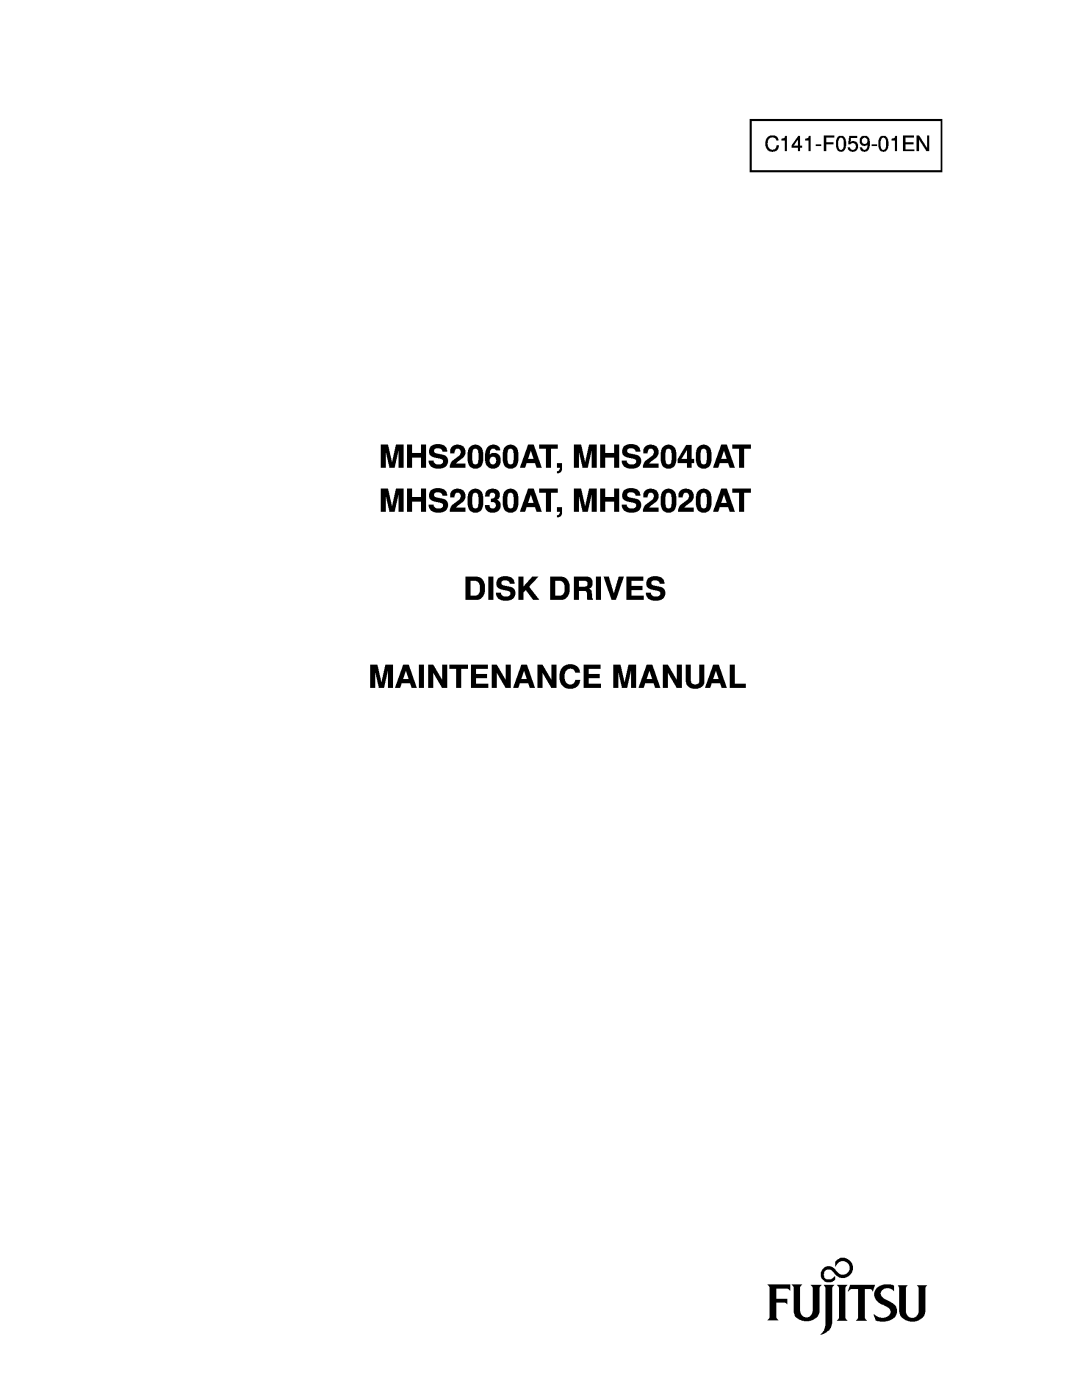 Fujitsu manual MHS2060AT, MHS2040AT MHS2030AT, MHS2020AT DISK DRIVES, Maintenance Manual, C141-F059-01EN 